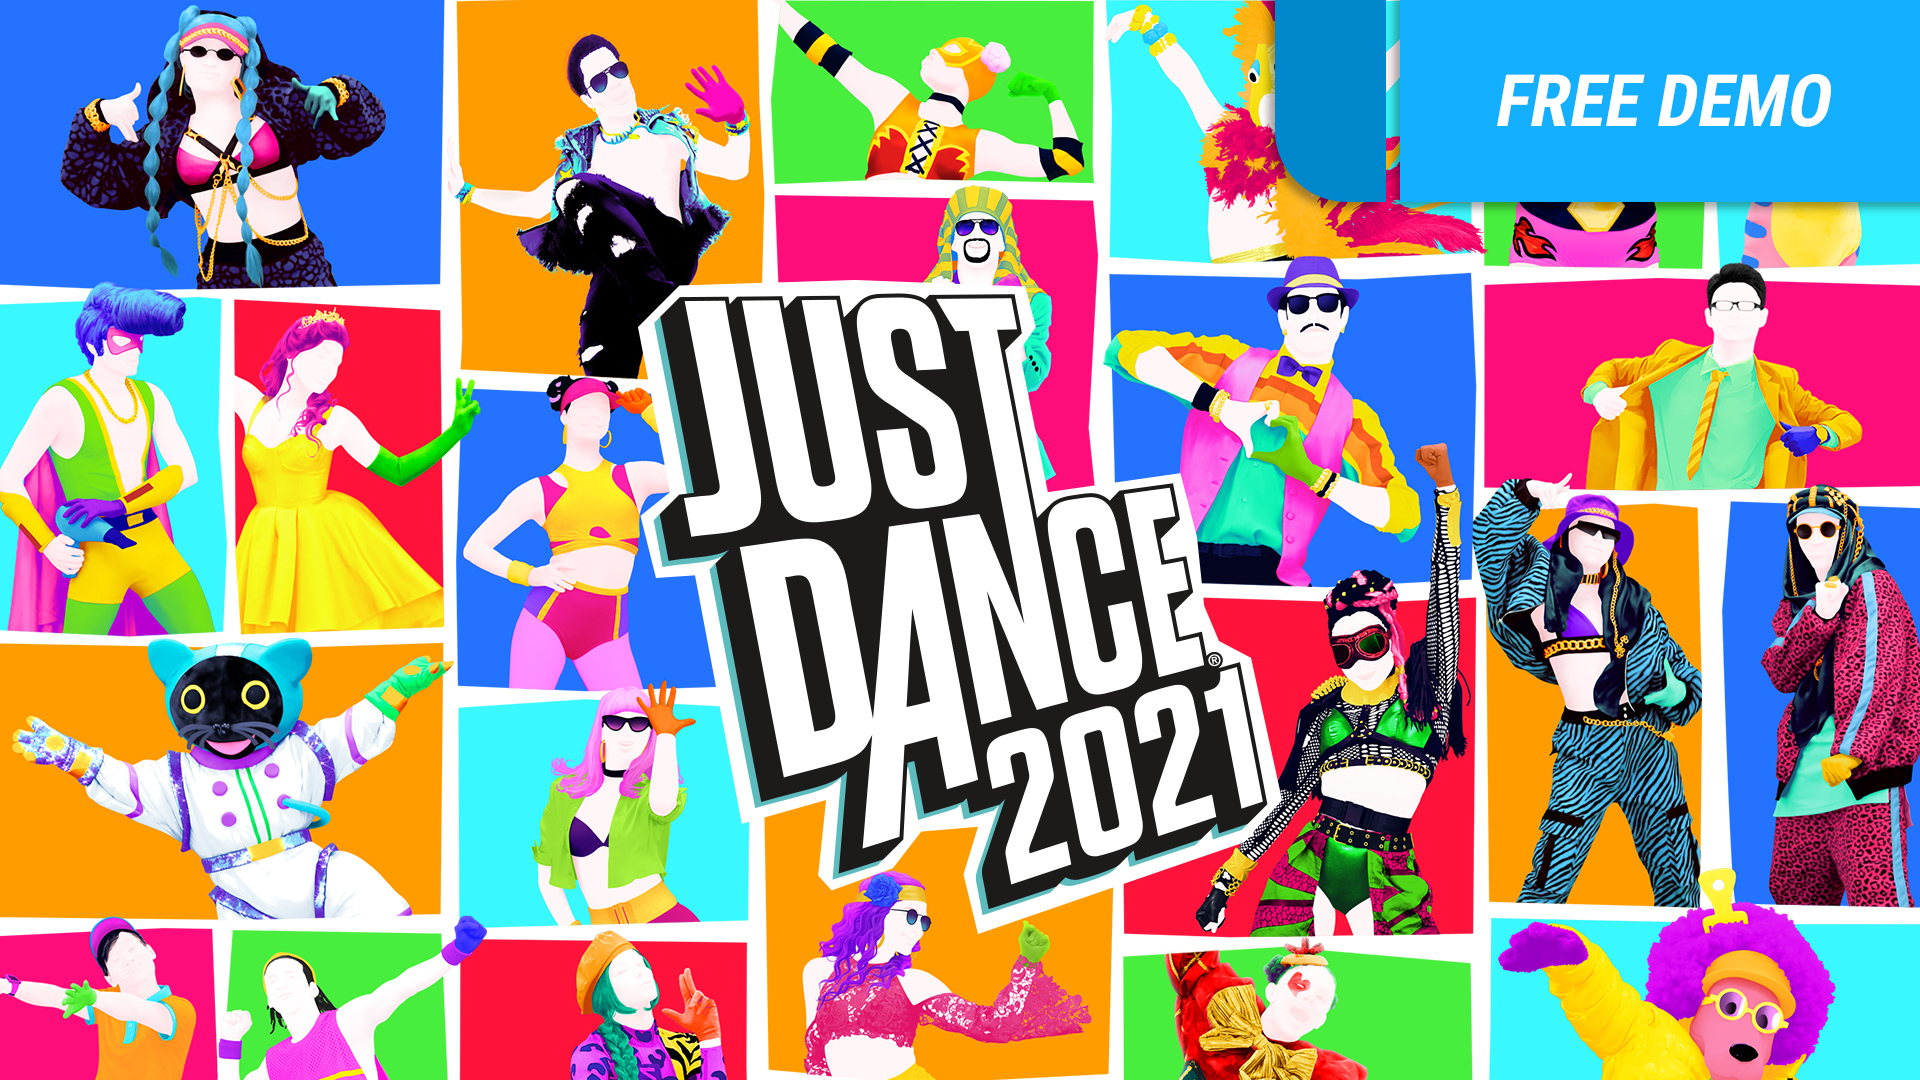 just dance 2020 switch nintendo eshop